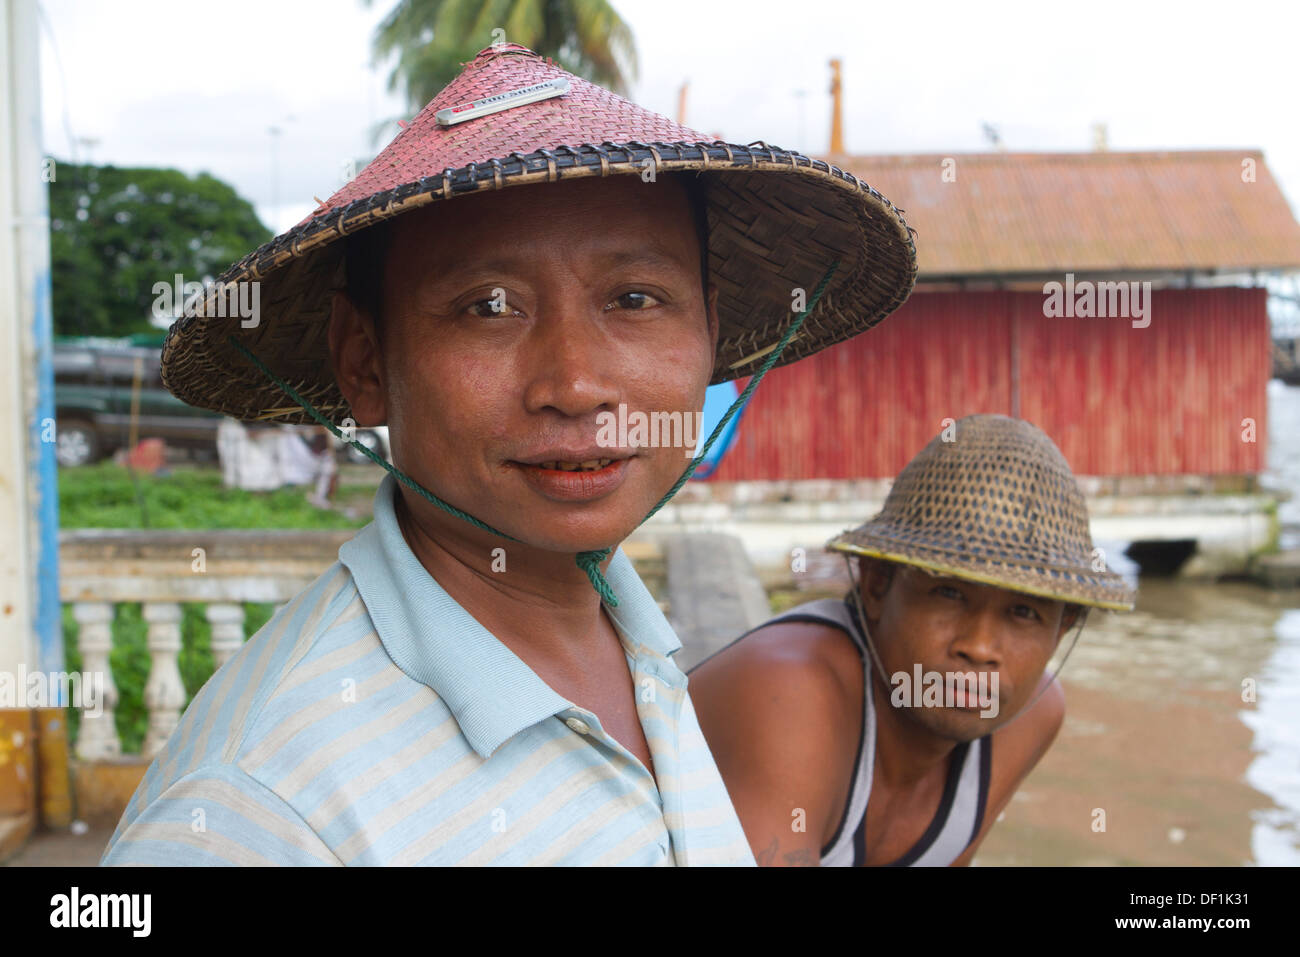 A burmese men in Yangon, Burma. Stock Photo